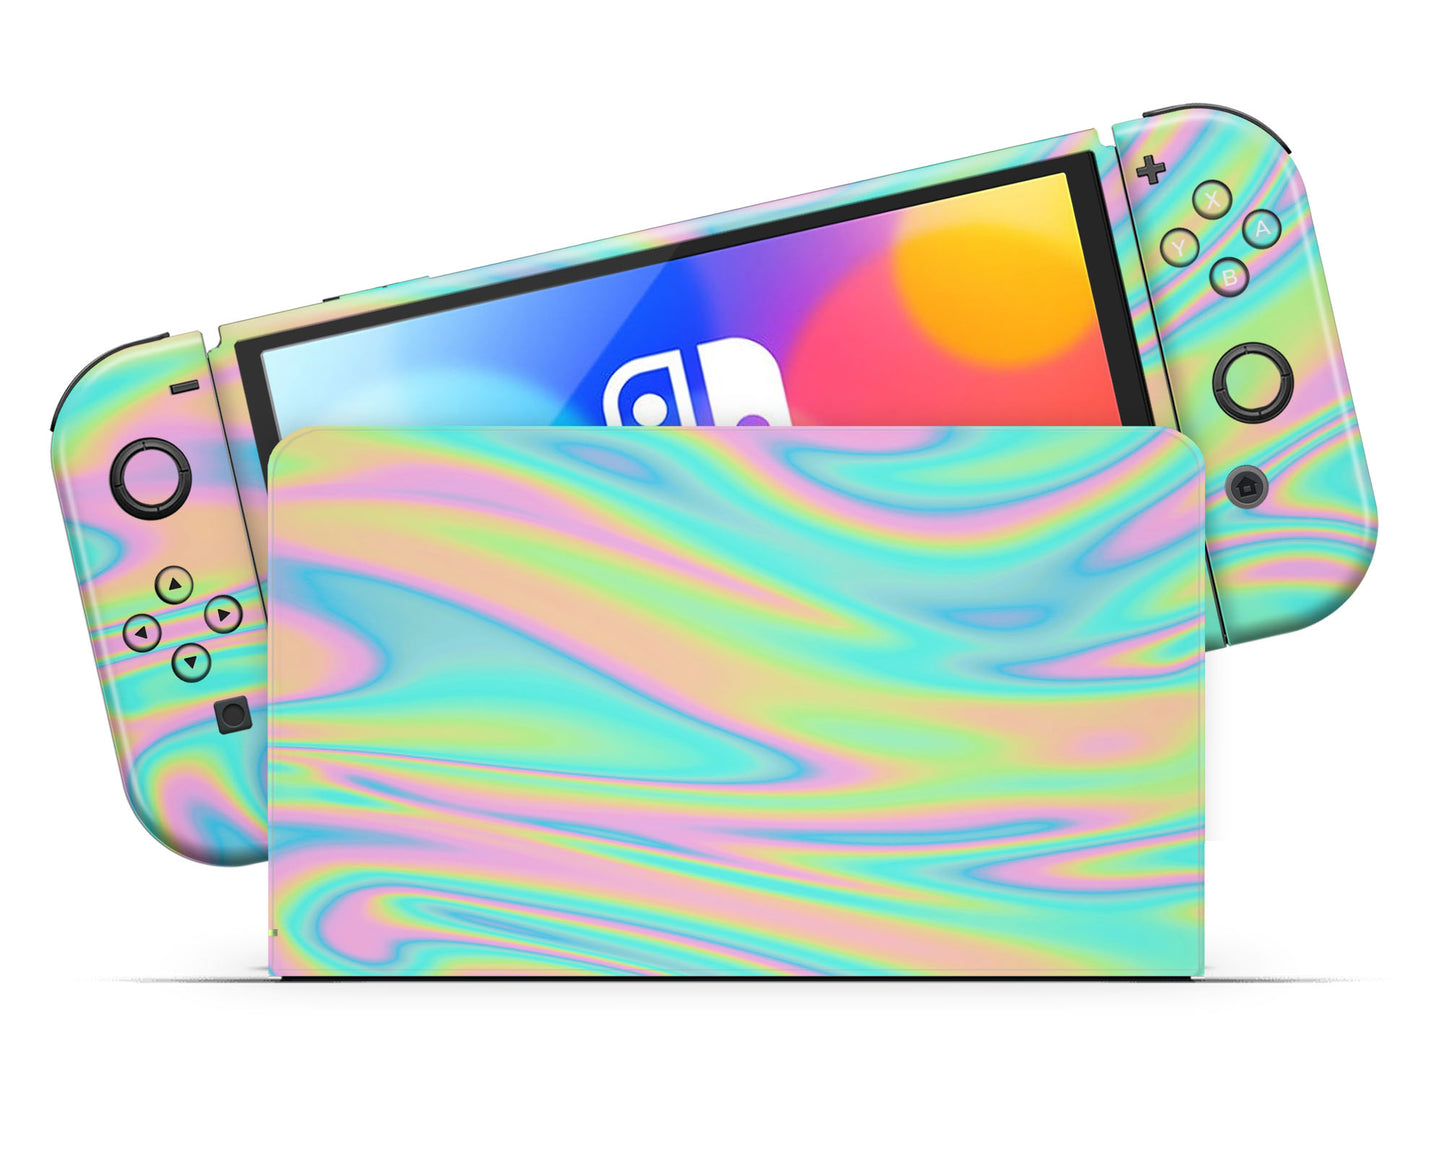 Rainbow Holographic Iridescent Swirl Nintendo Switch OLED Skin